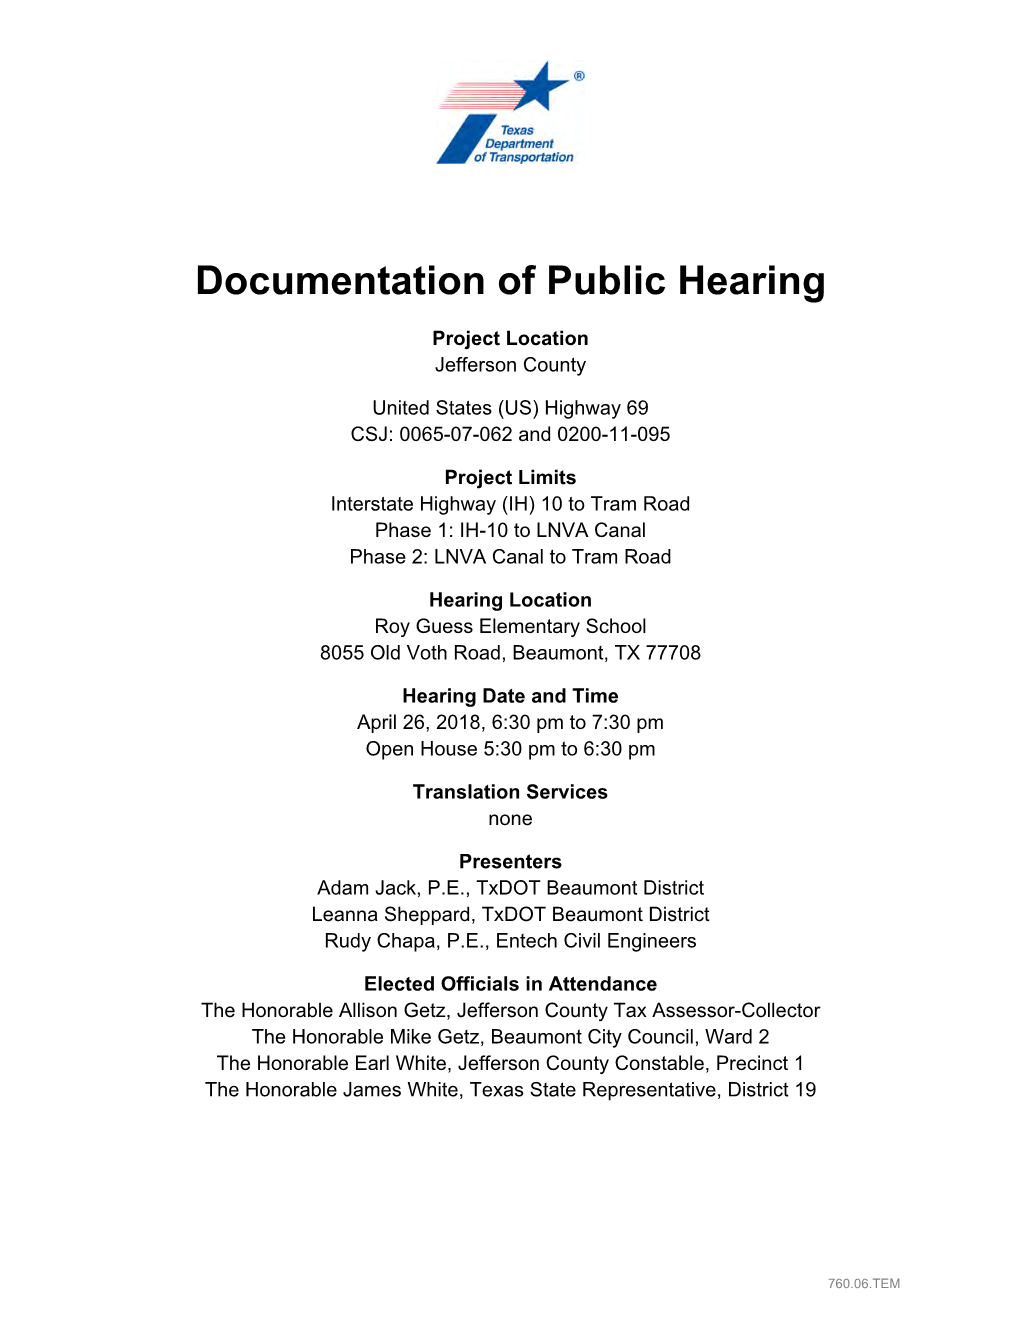 Documentation of a Public Hearing